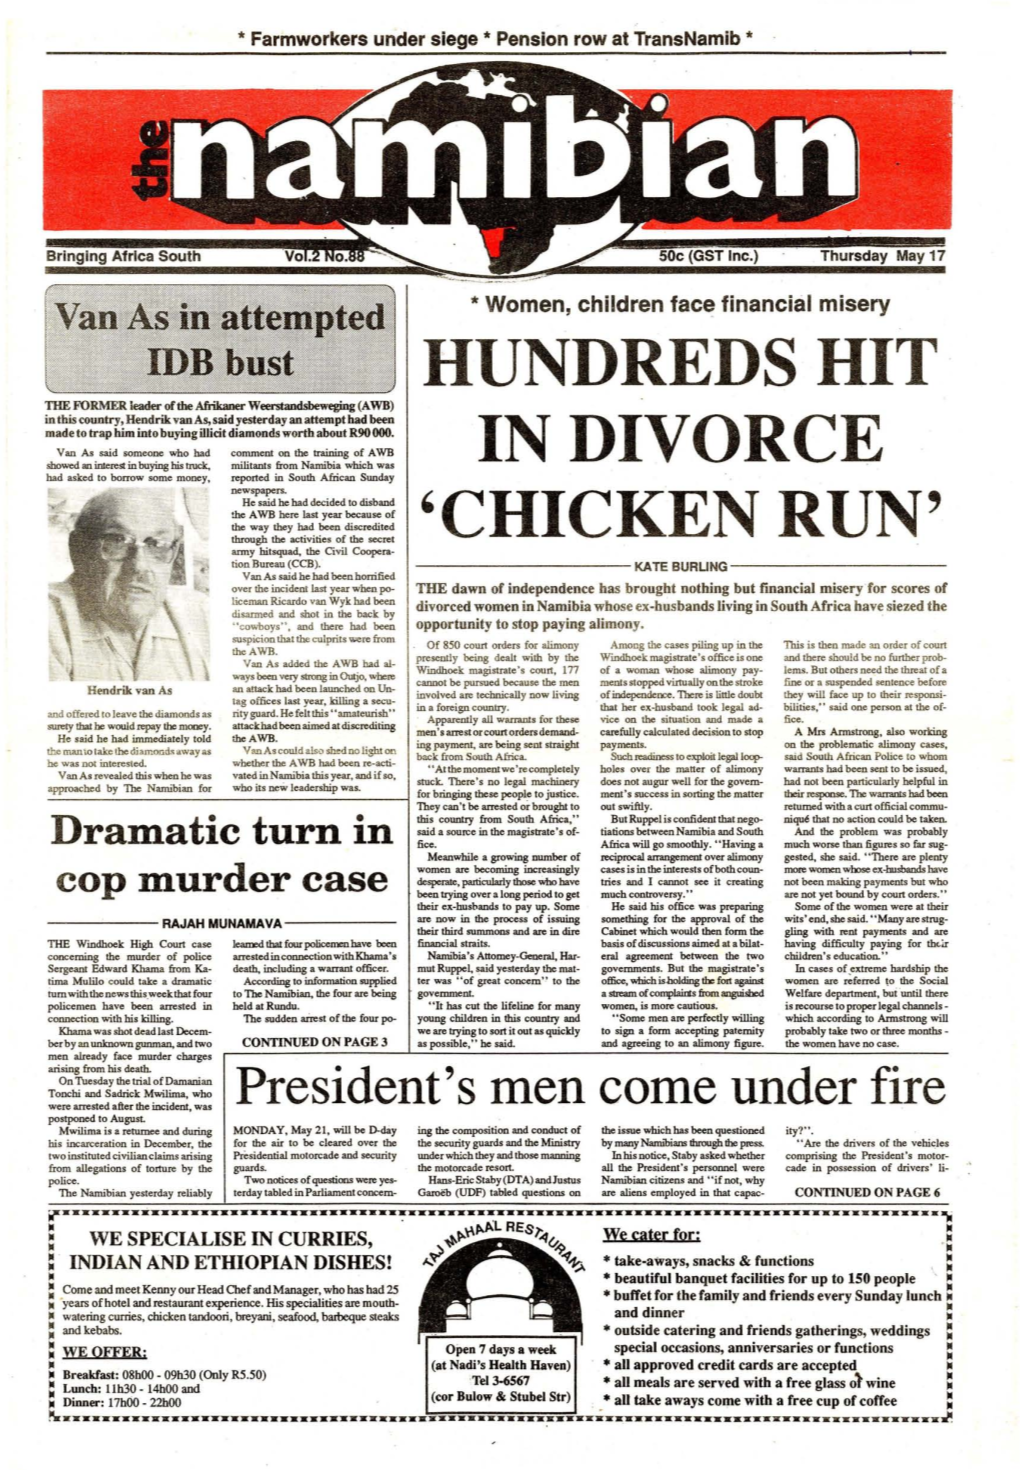 Hundreds Hit in Divorce 'Chicken Run'